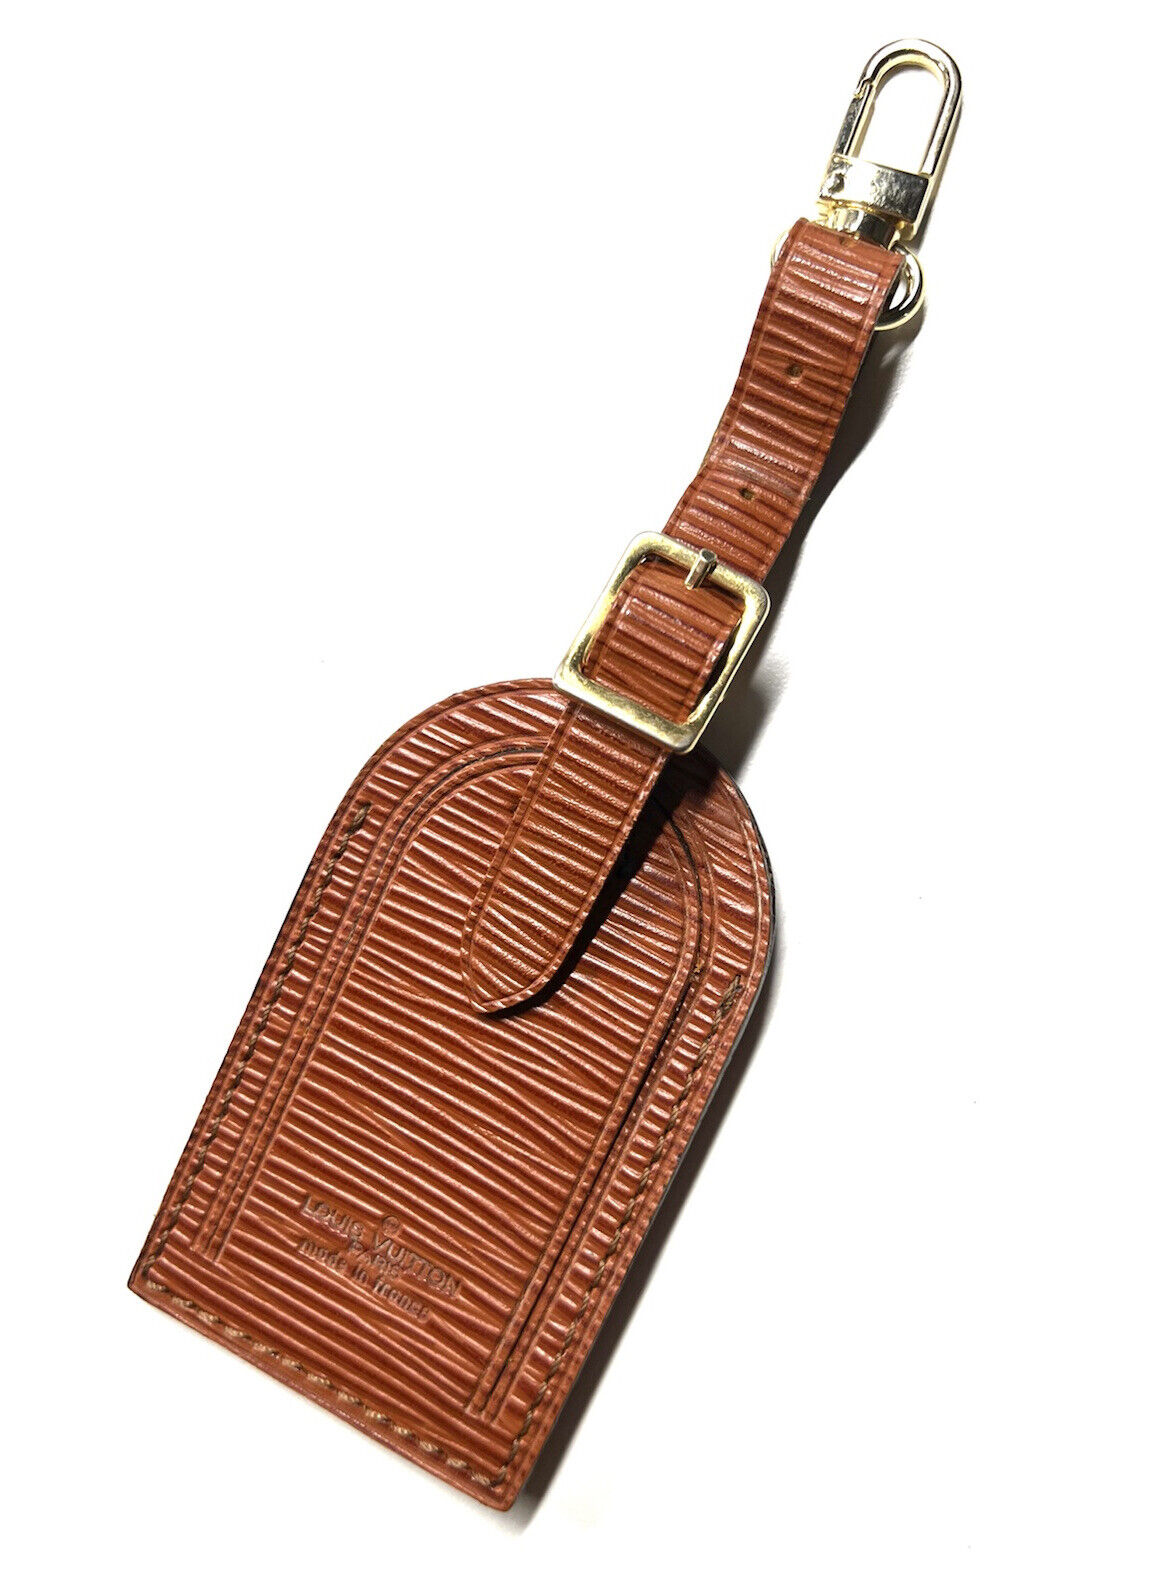 Louis Vuitton Name Tag Kenyan Fawn Epi Leather Vintage Large -Goldtone